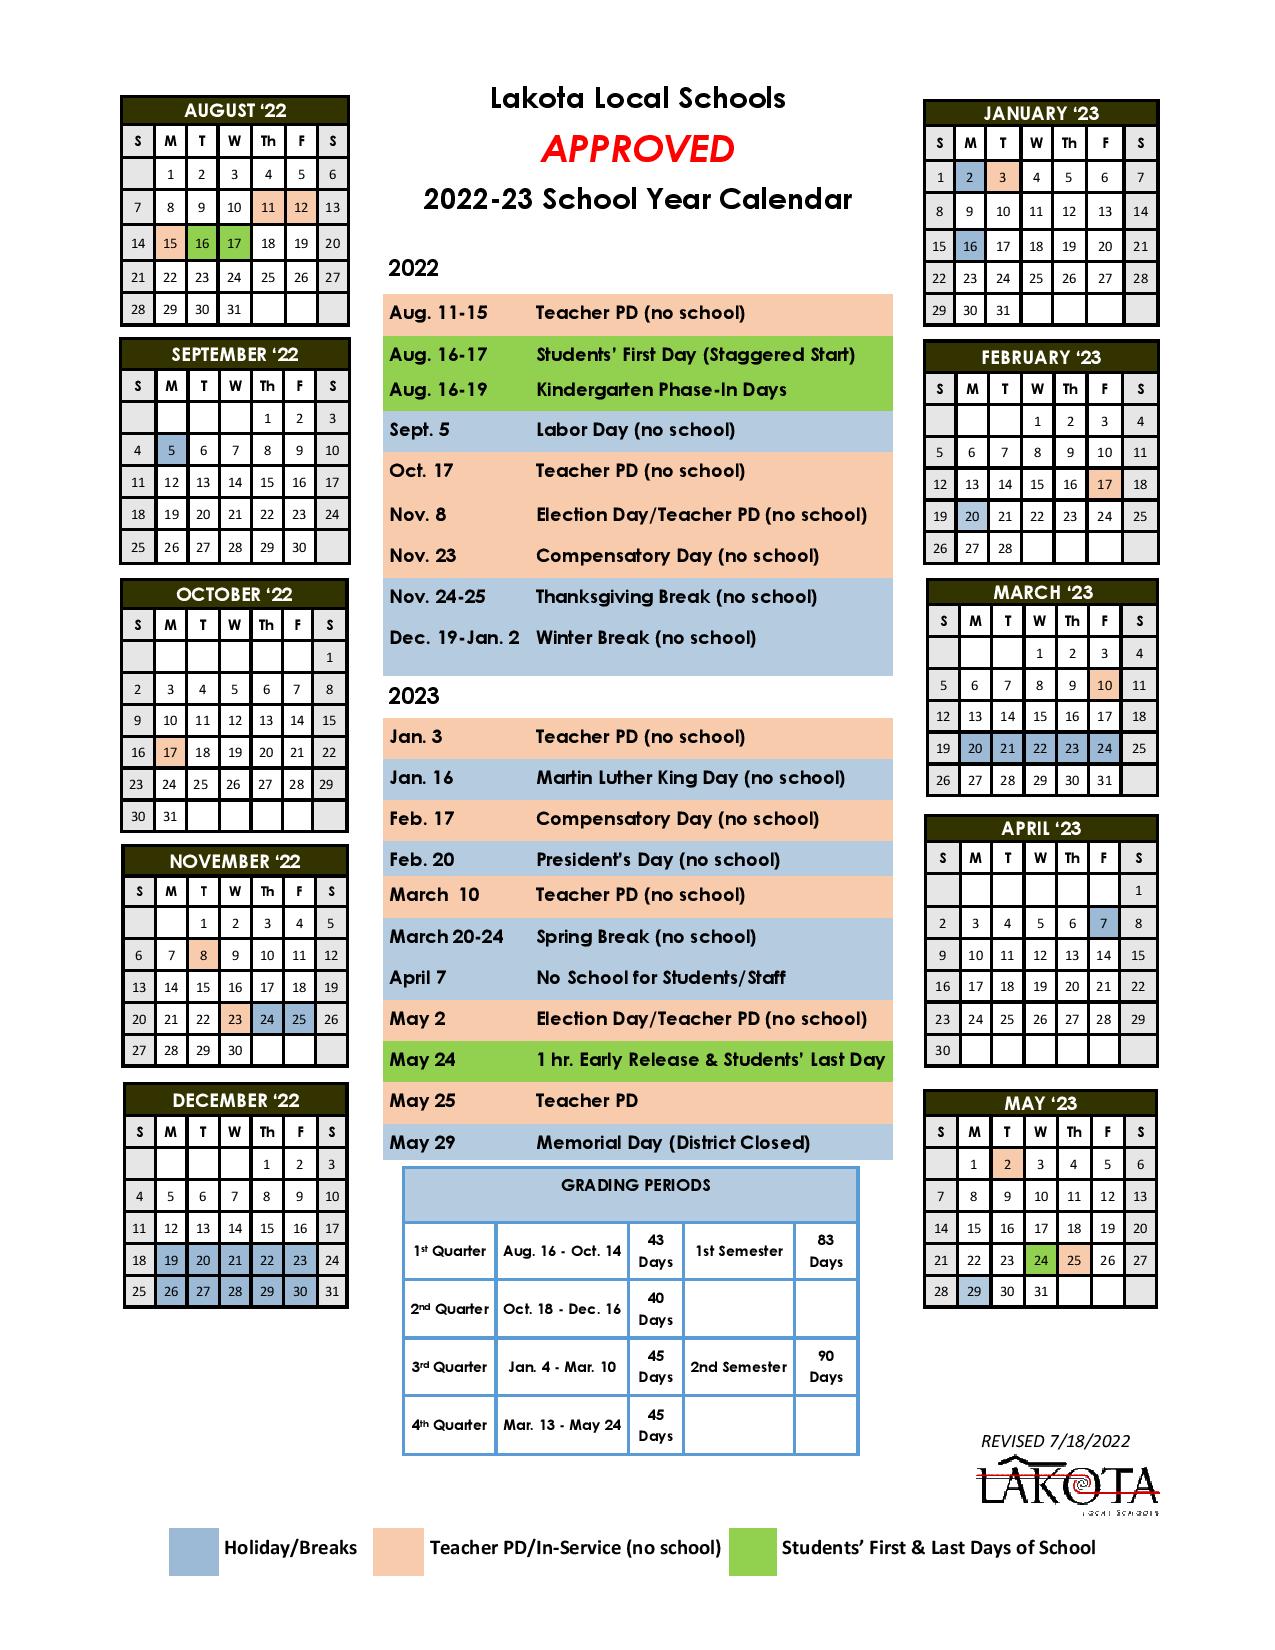 Lakota Local Schools Calendar 20222023 in PDF